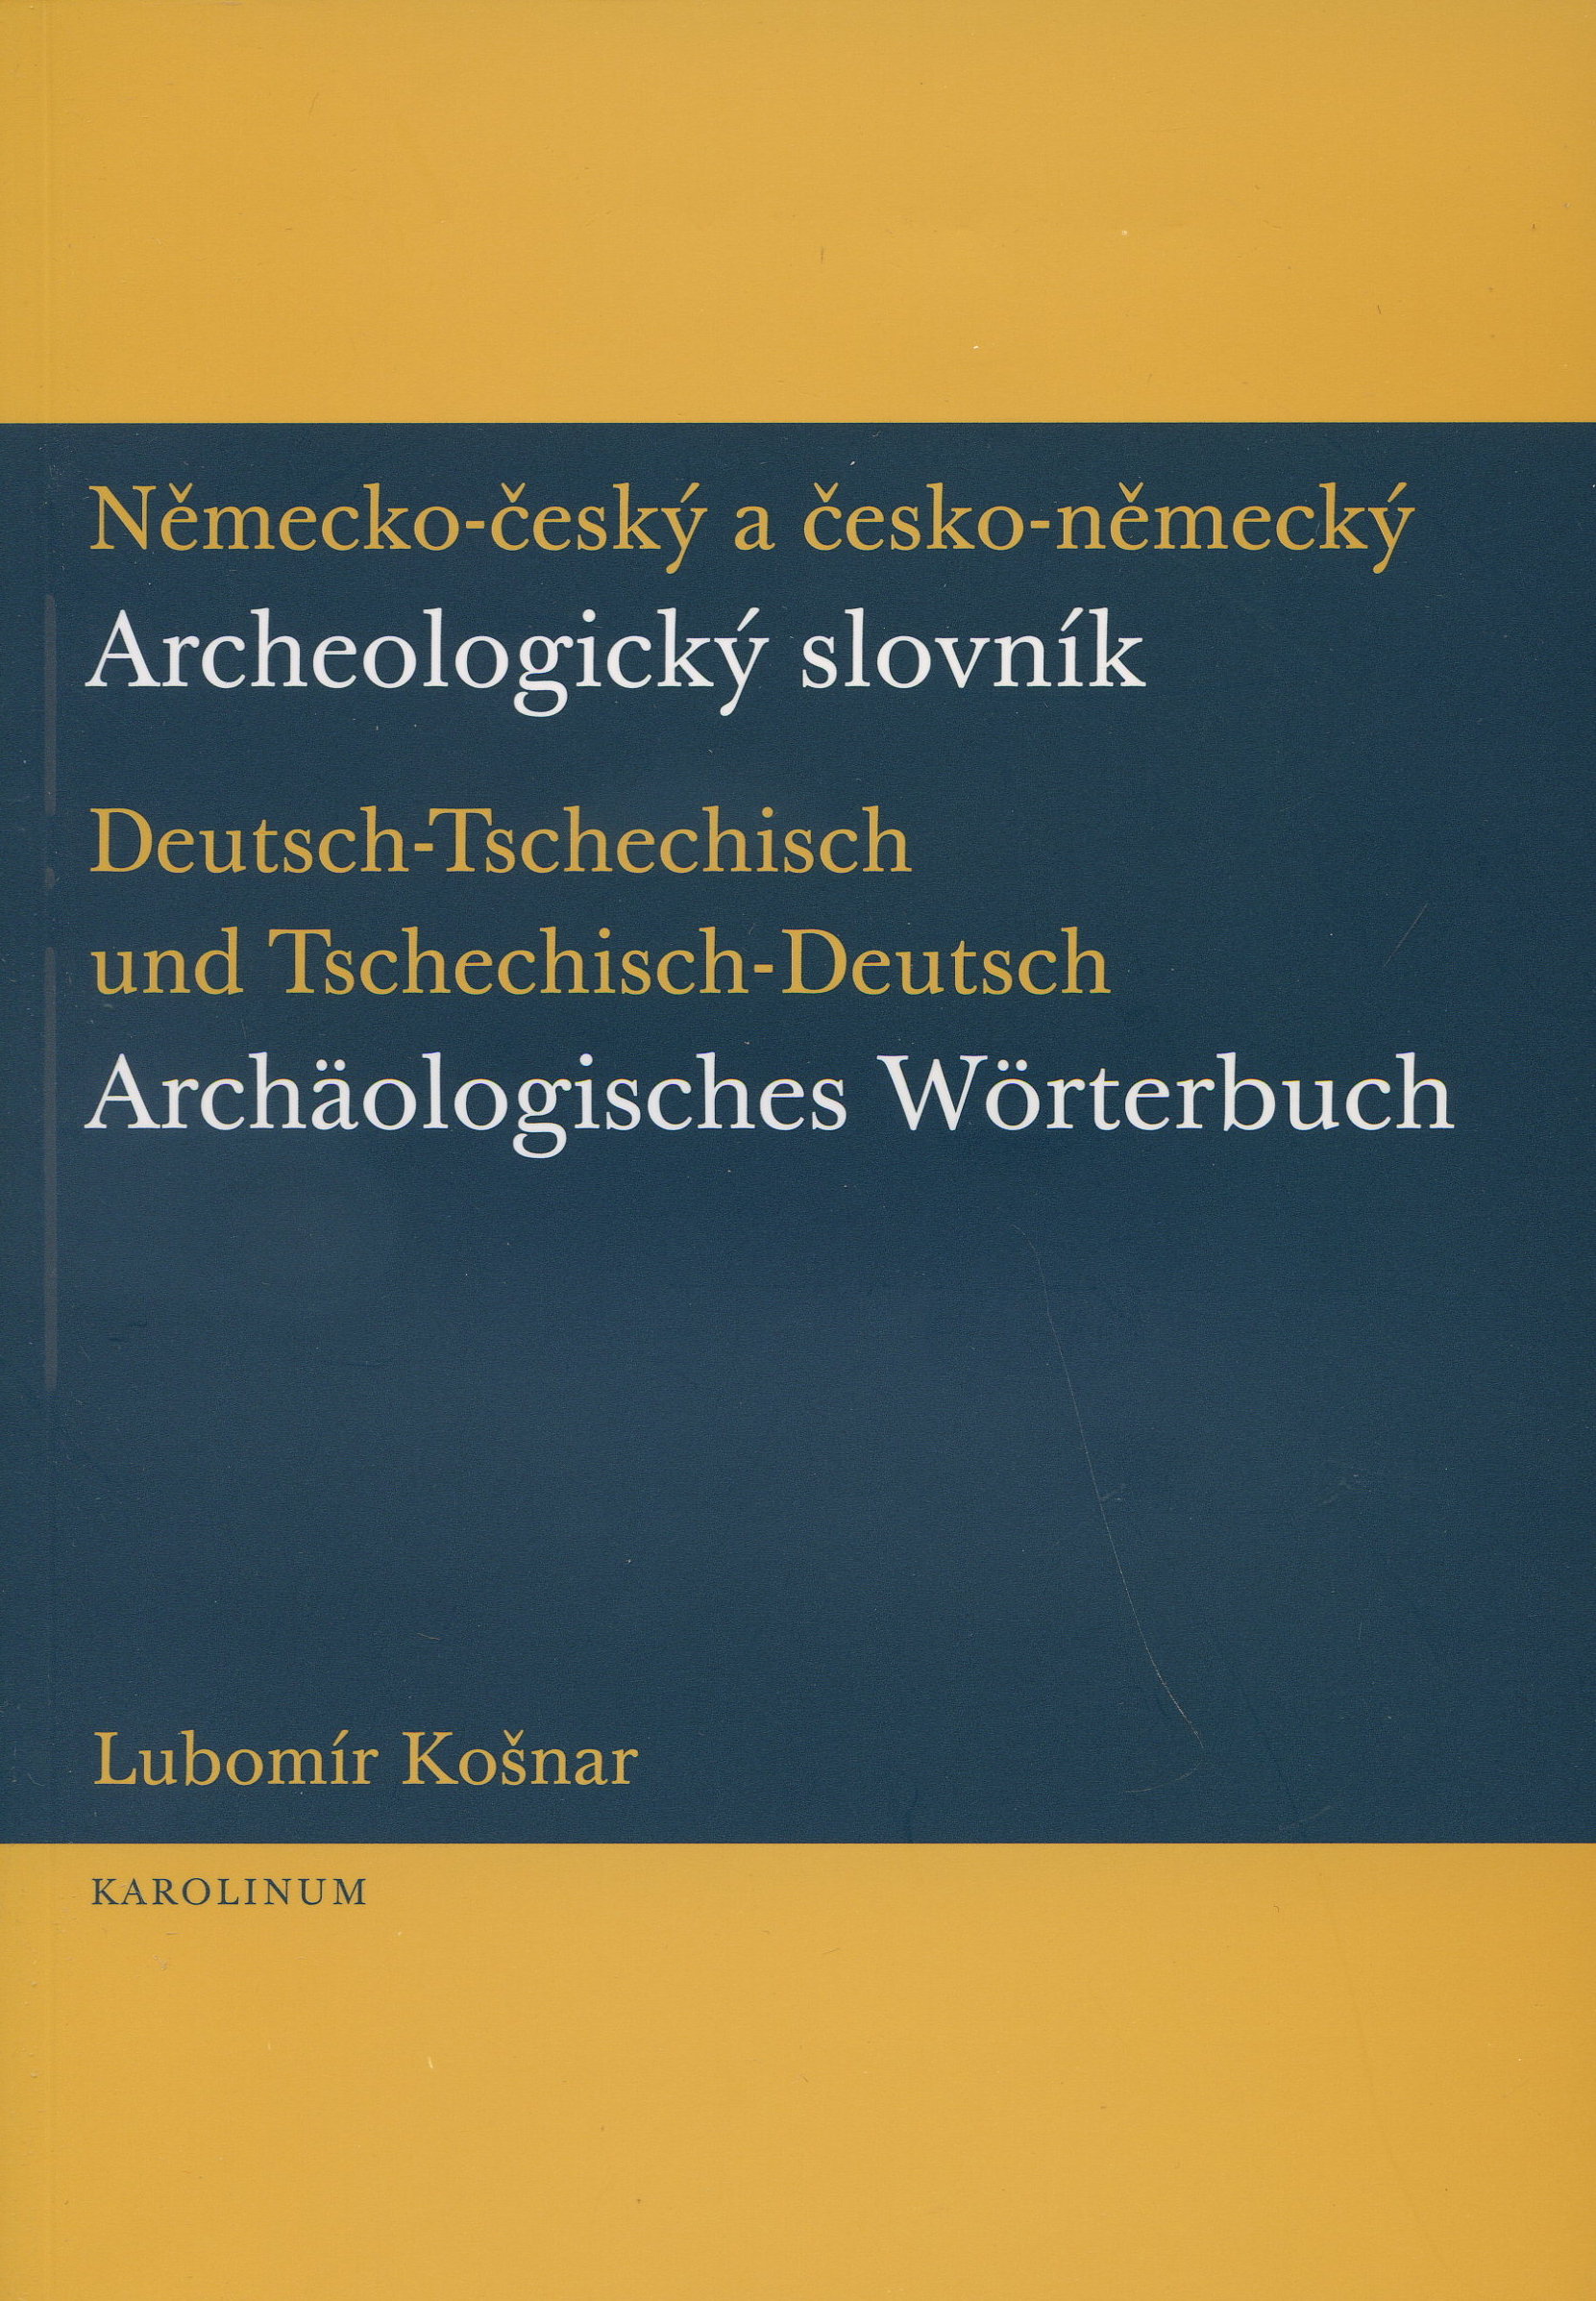 Německo-český a česko-německý archeologický slovník - Deutsch-Tschechisch und Tschechisch-Deutsch Archäologisches Wörterbuch